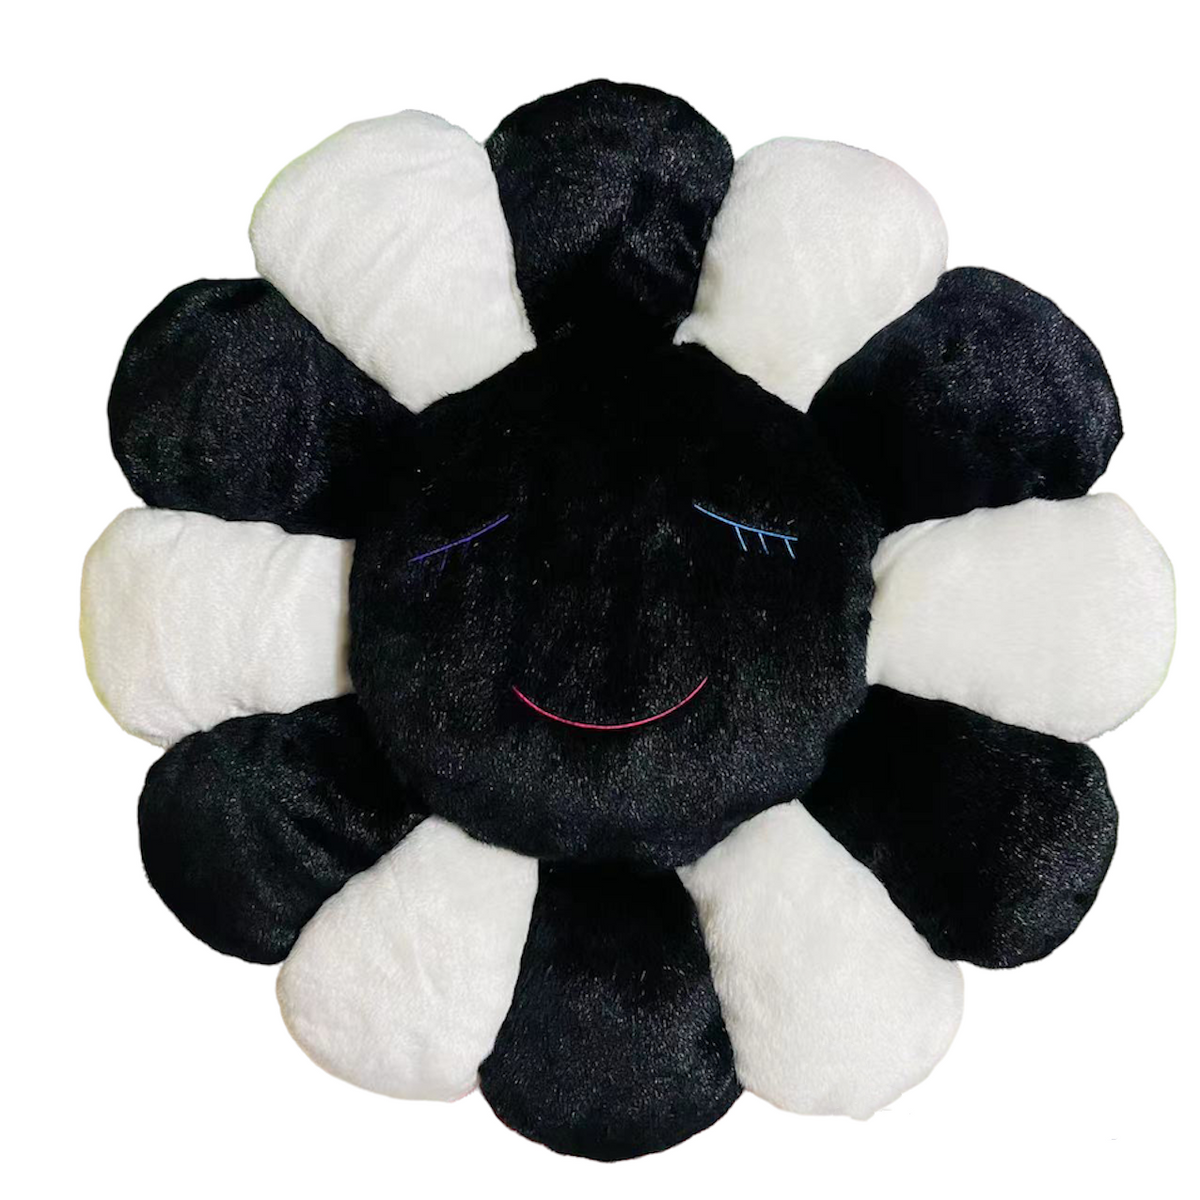 Takashi Murakami flower pillow cushion black and white kaikai kiki